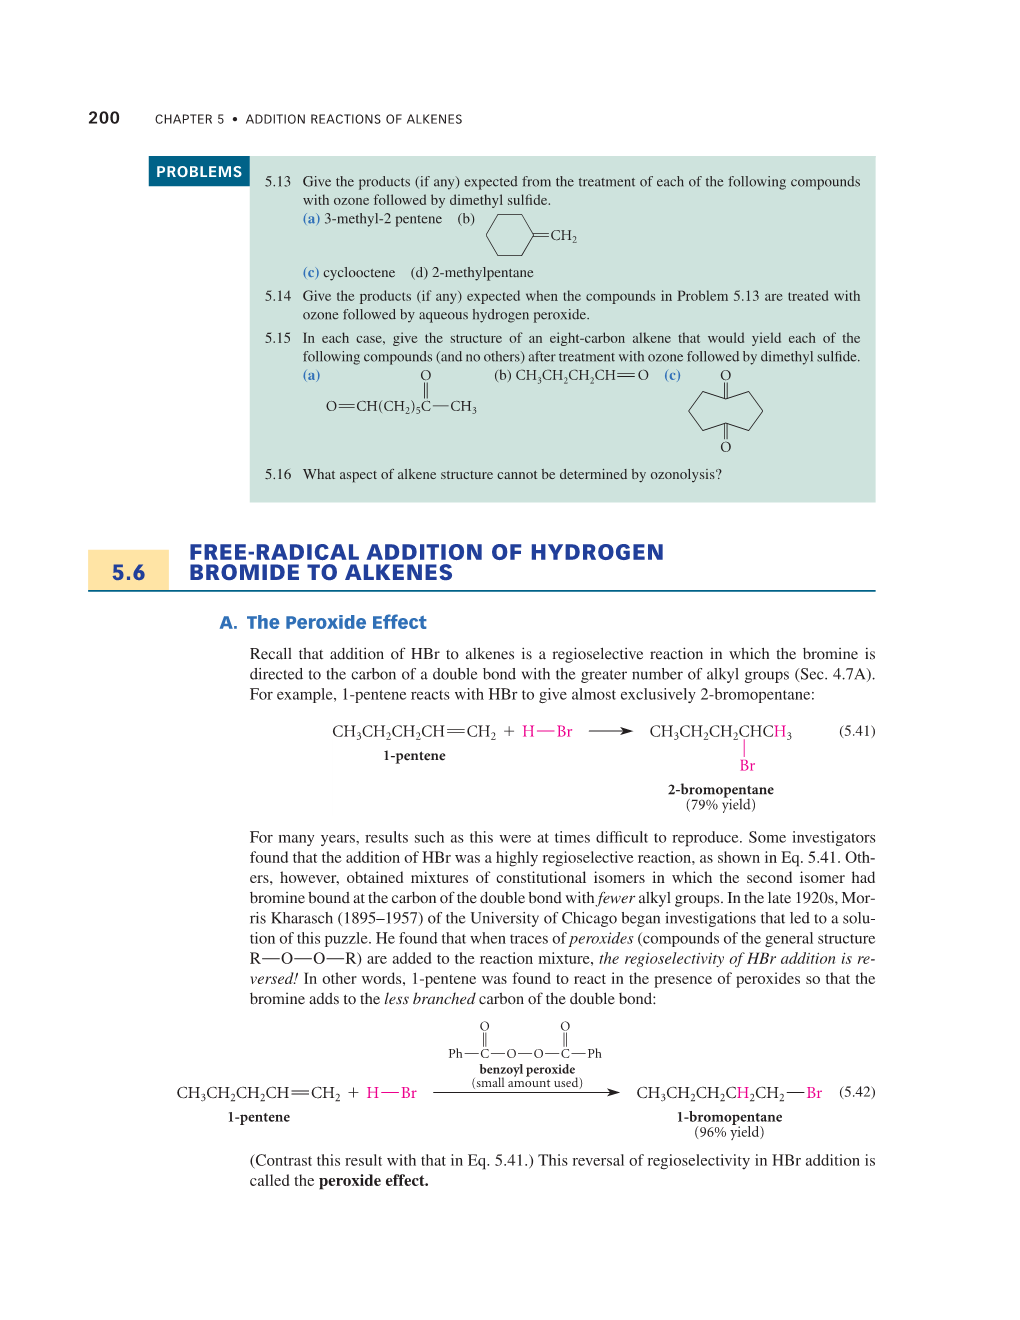 5.6 Free-Radical Addition of Hydrogen Bromide to Alkenes 201